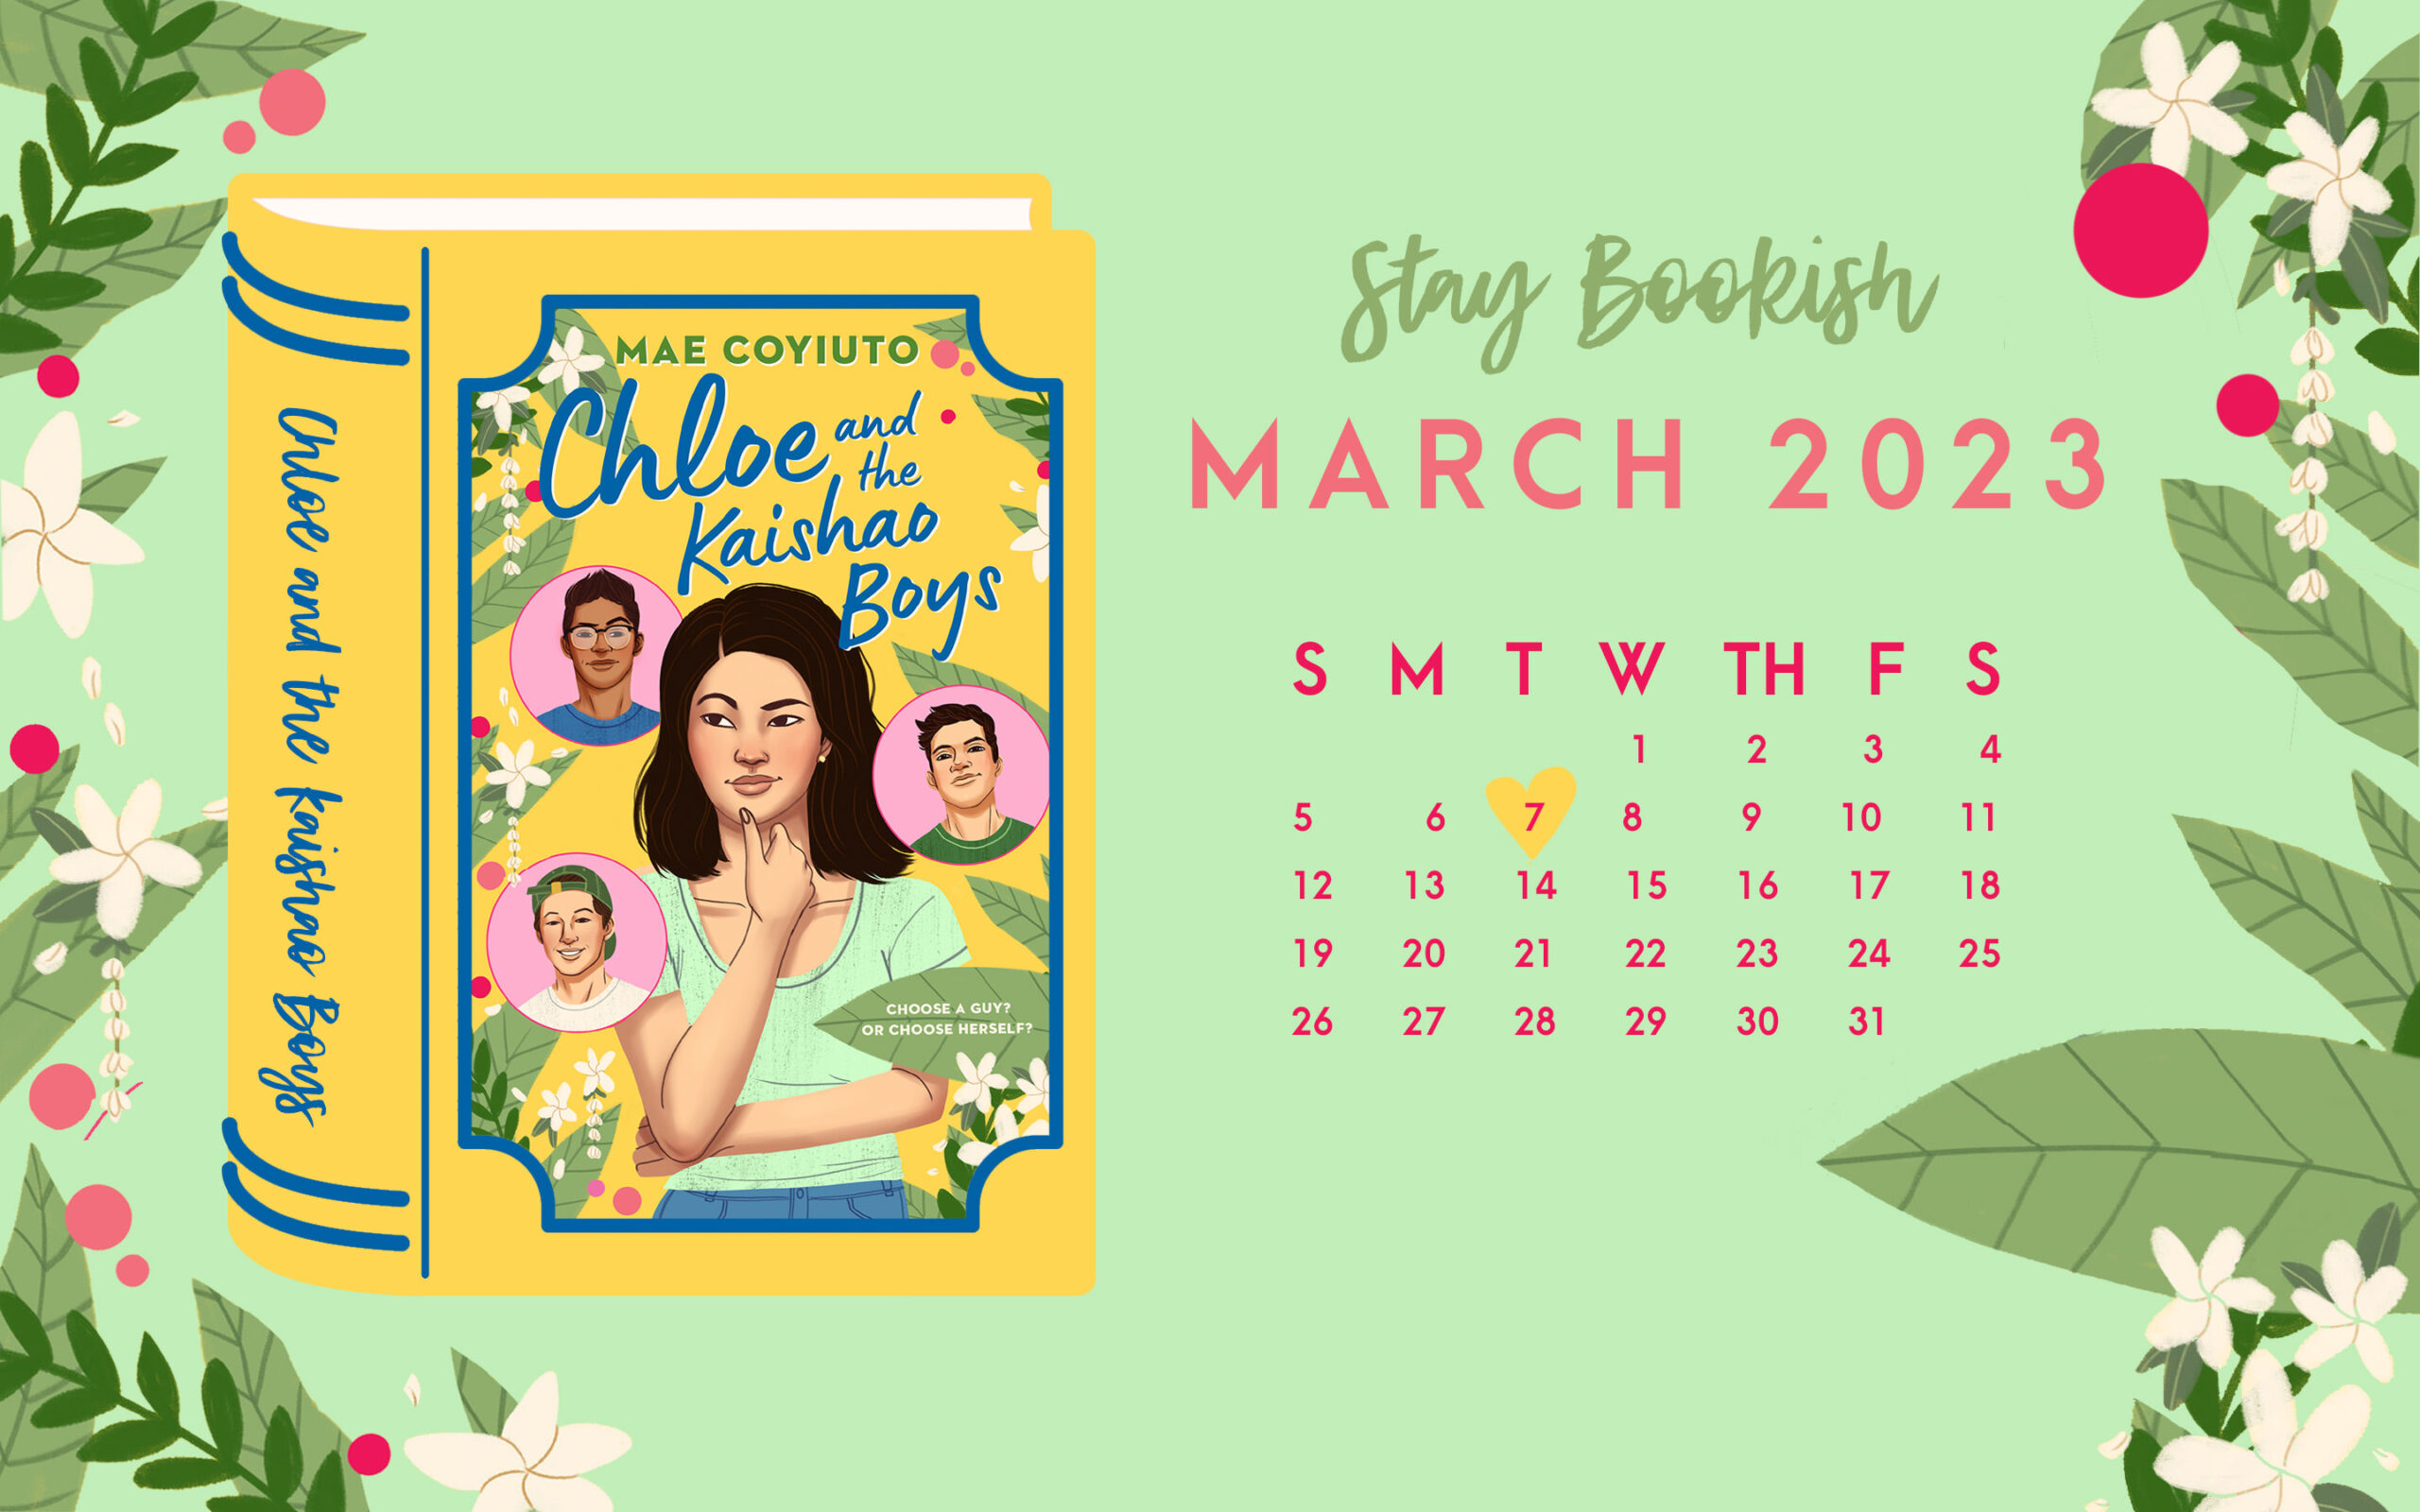 Stay Bookish March 2023 Desktop Wallpaper - Chloe and the Kaishao Boys by Mae Coyiuto